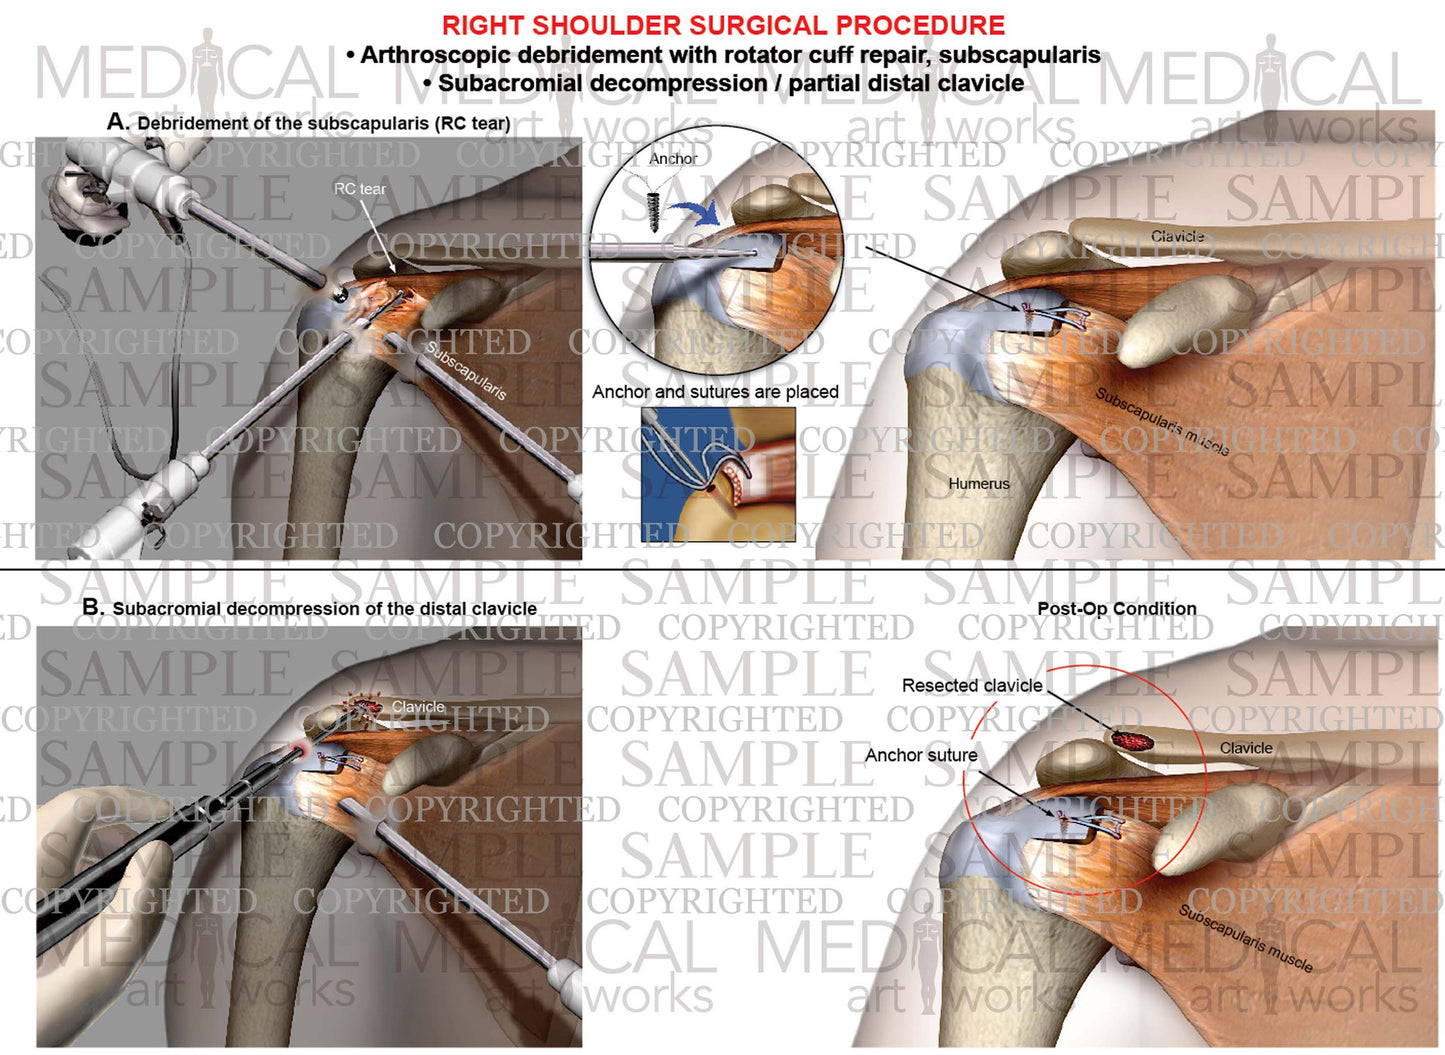 Right shoulder arthroscopic Surgery - RC repair